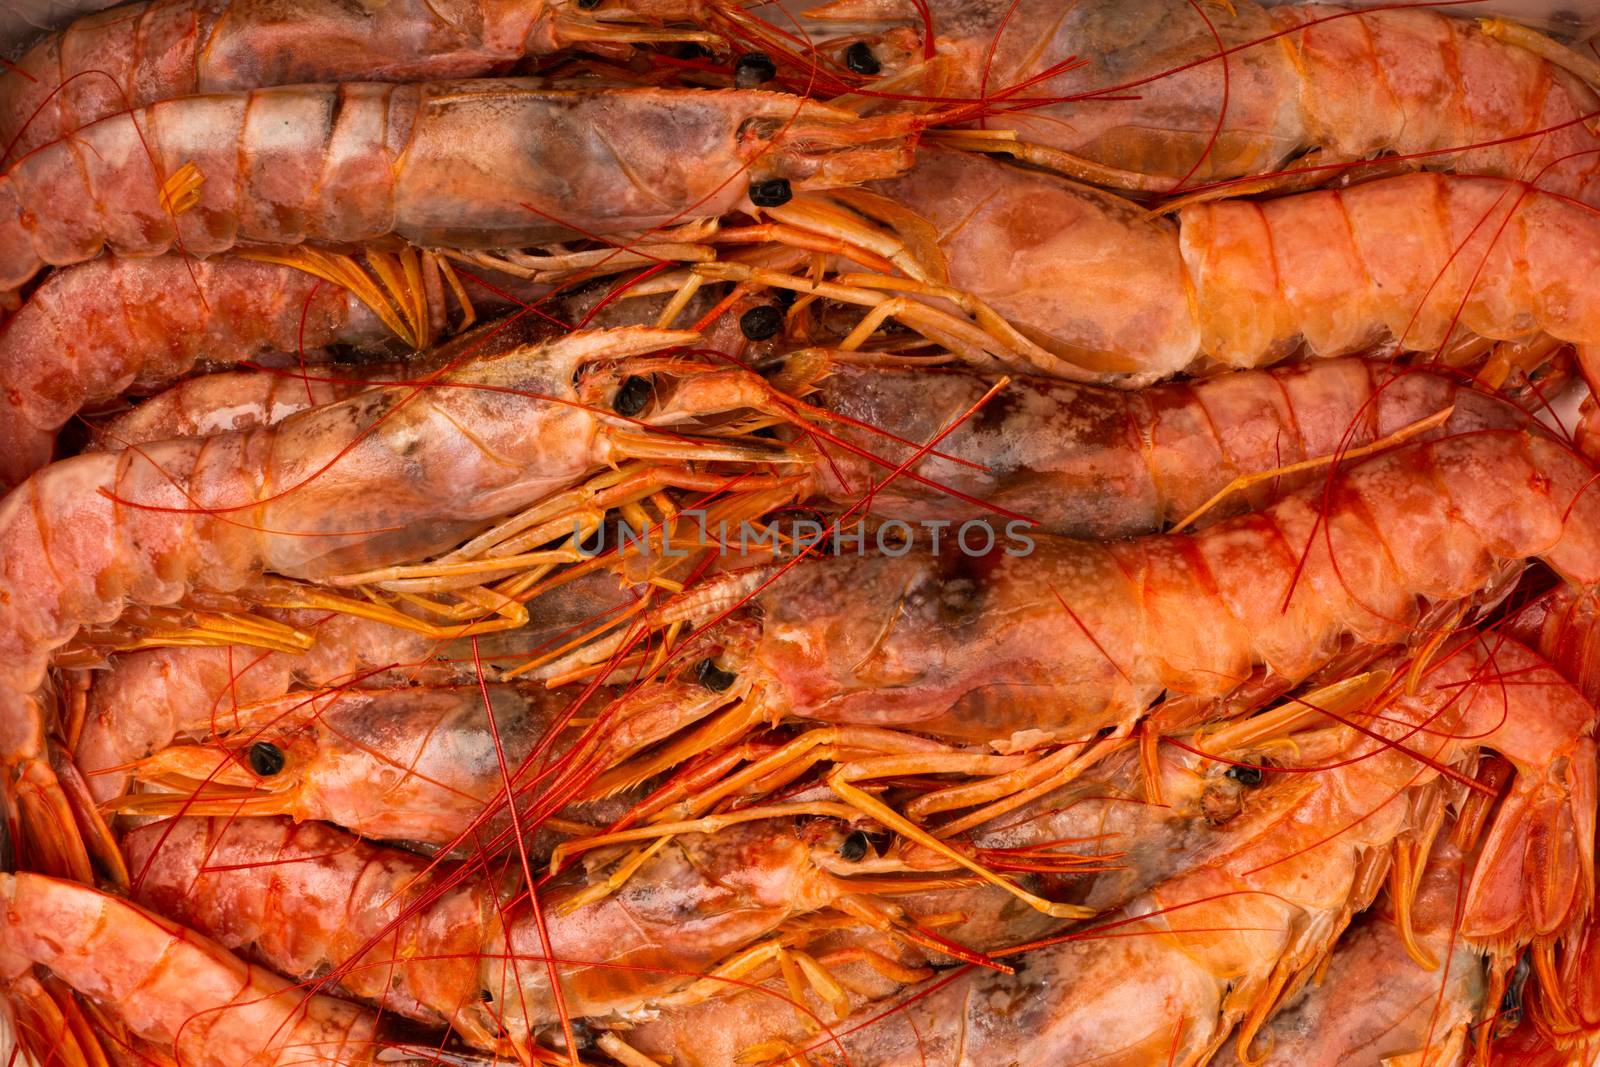 Raw shrimp langostino background by destillat